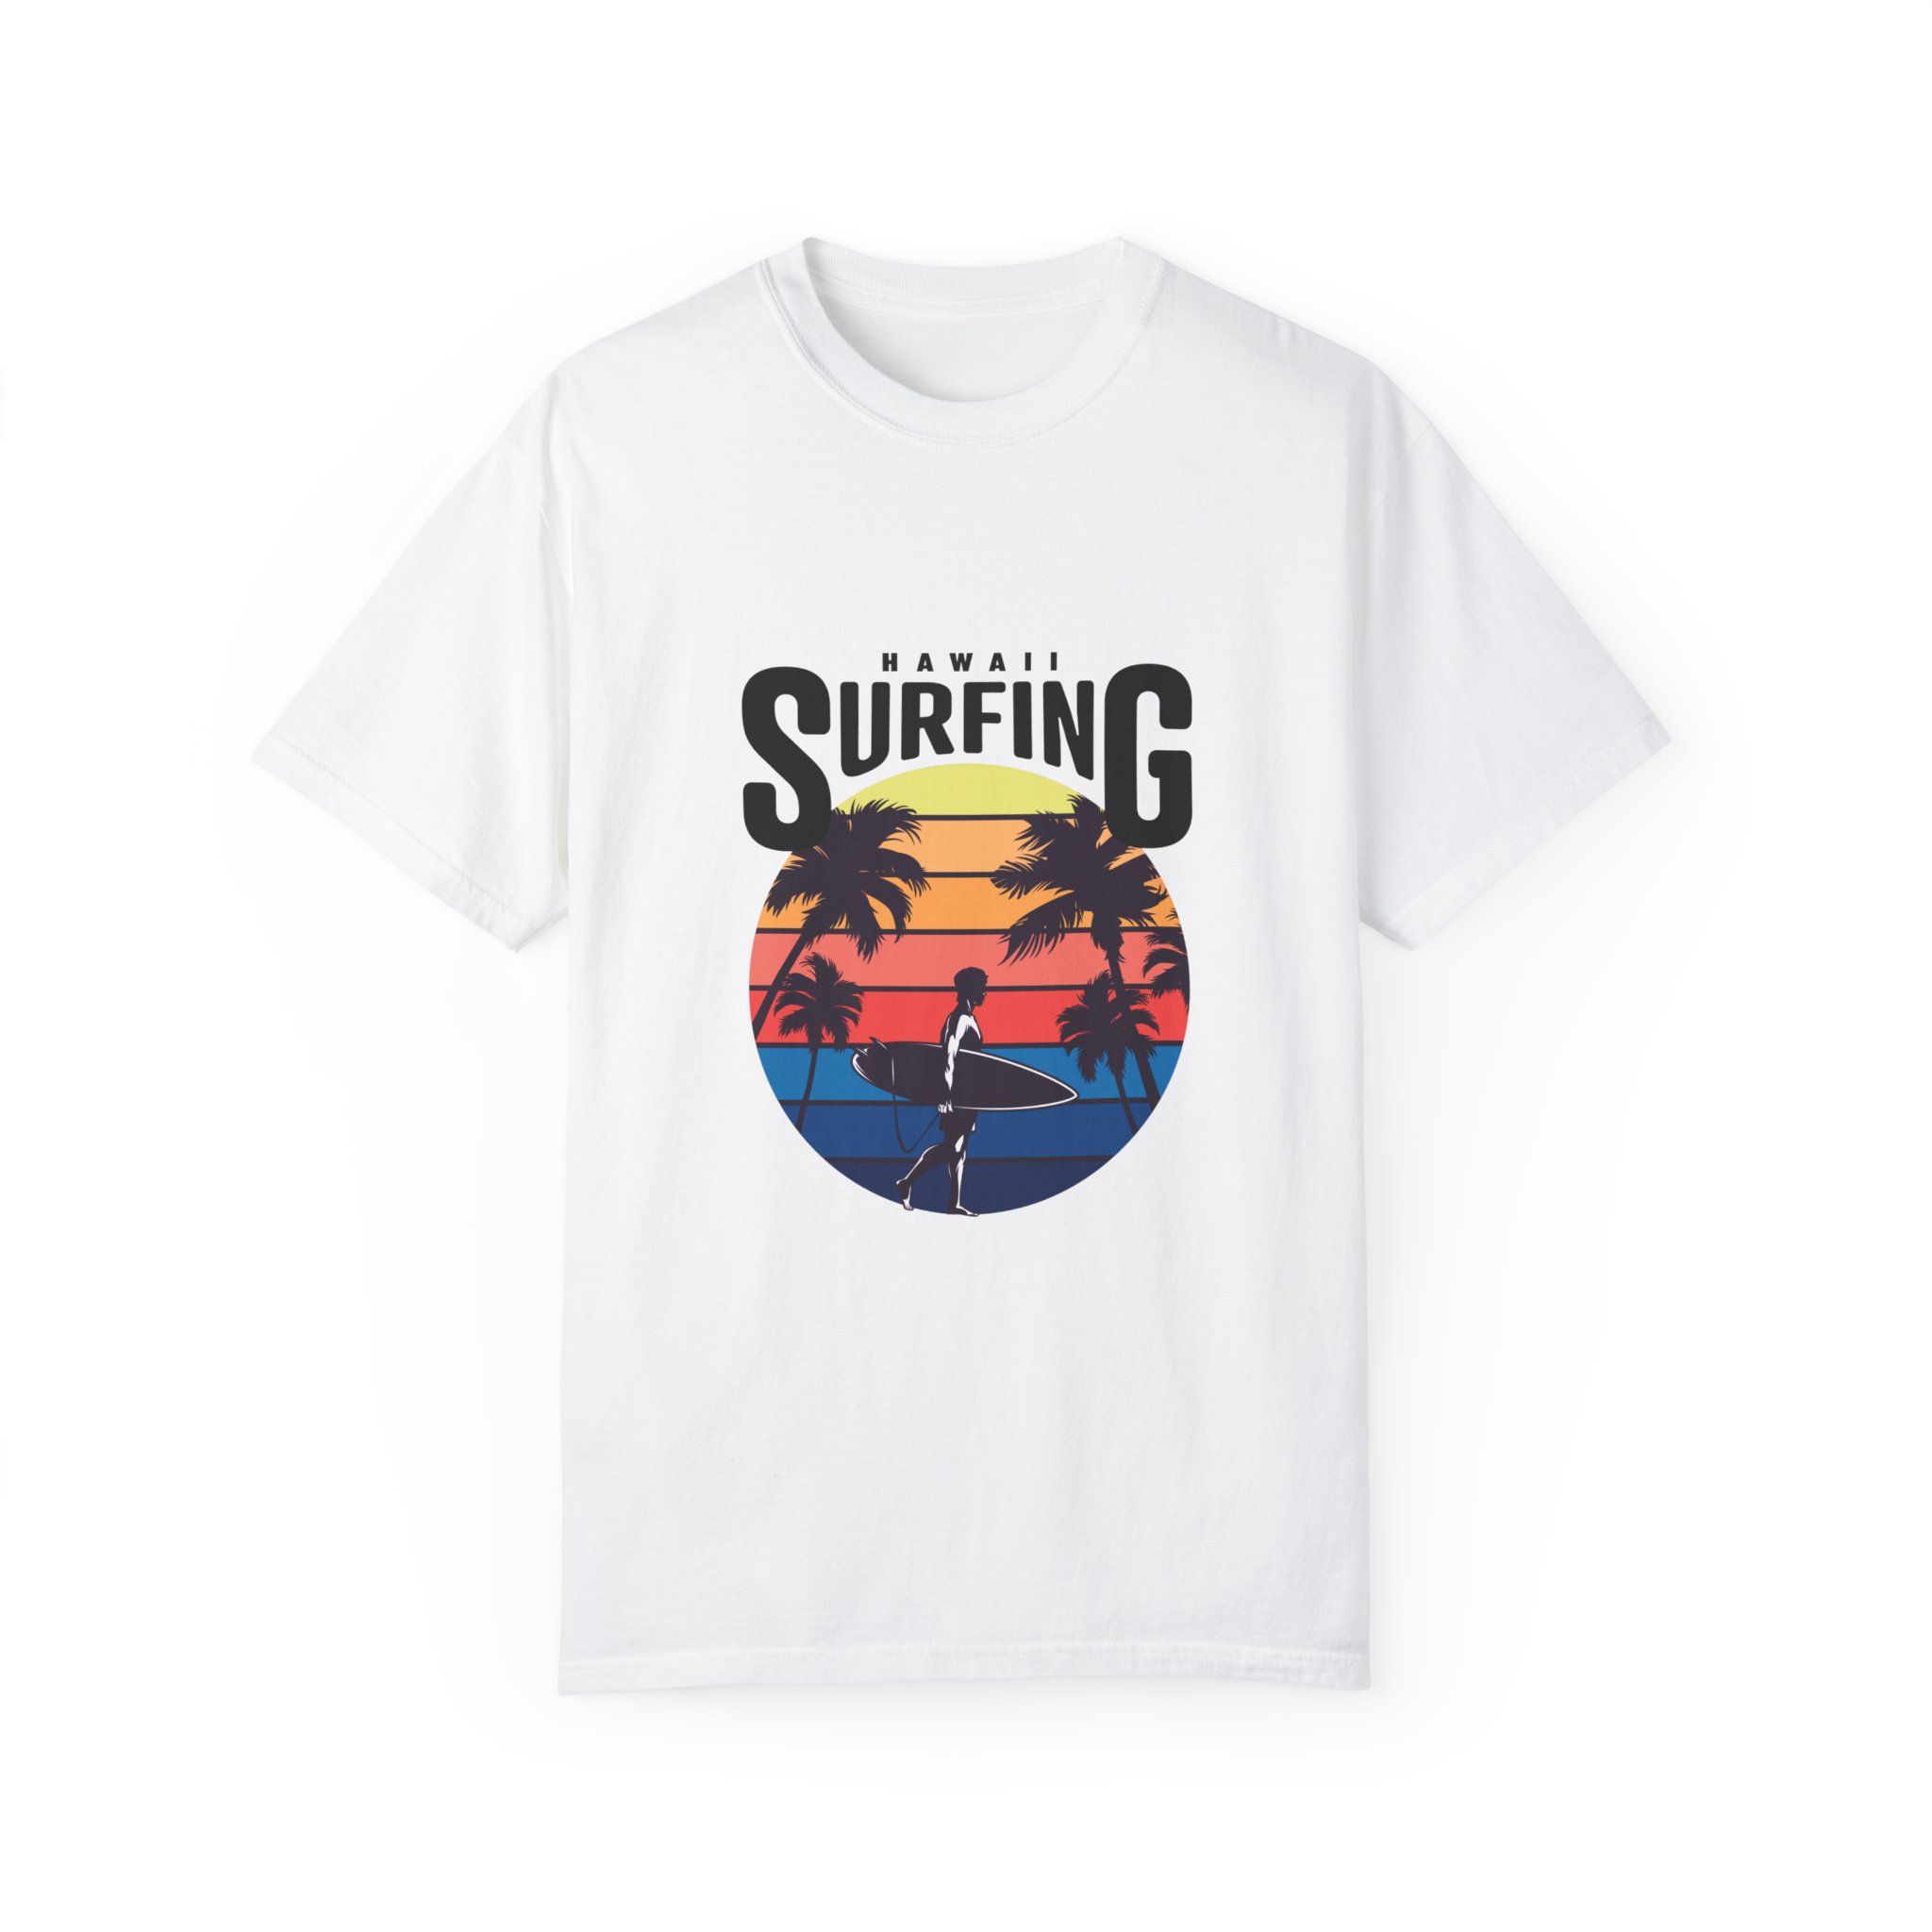 Summer Sea Vibes T-Shirt for Men - S M L XL 2XL 3XL 4XL 5XL